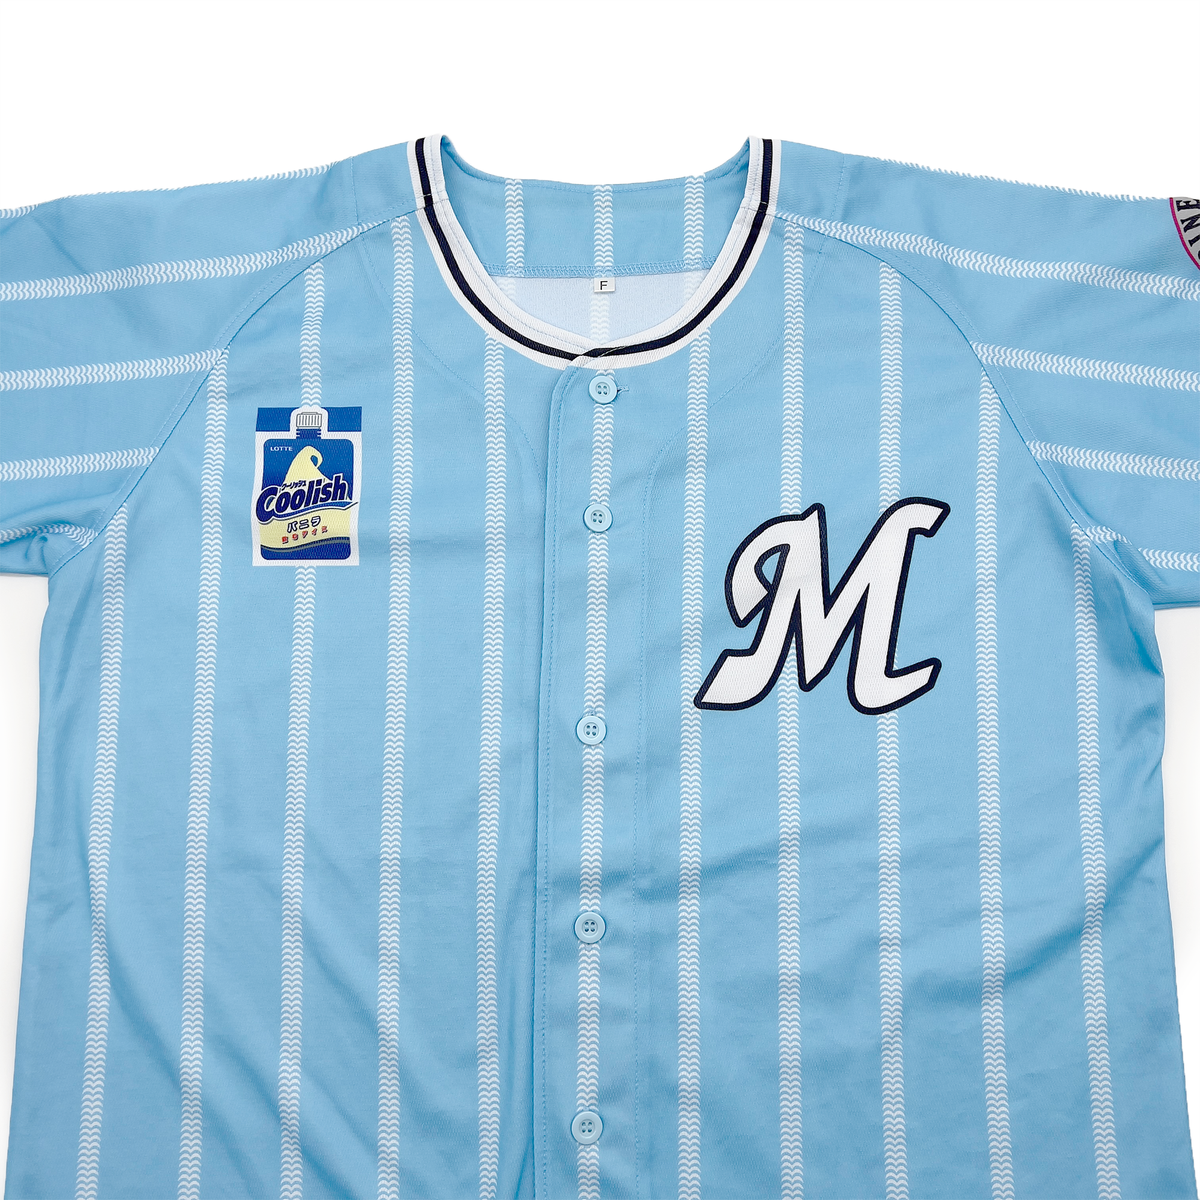 New Japan NPB Chiba Lotte Marines Baseball Promotional Jersey Blue 2019